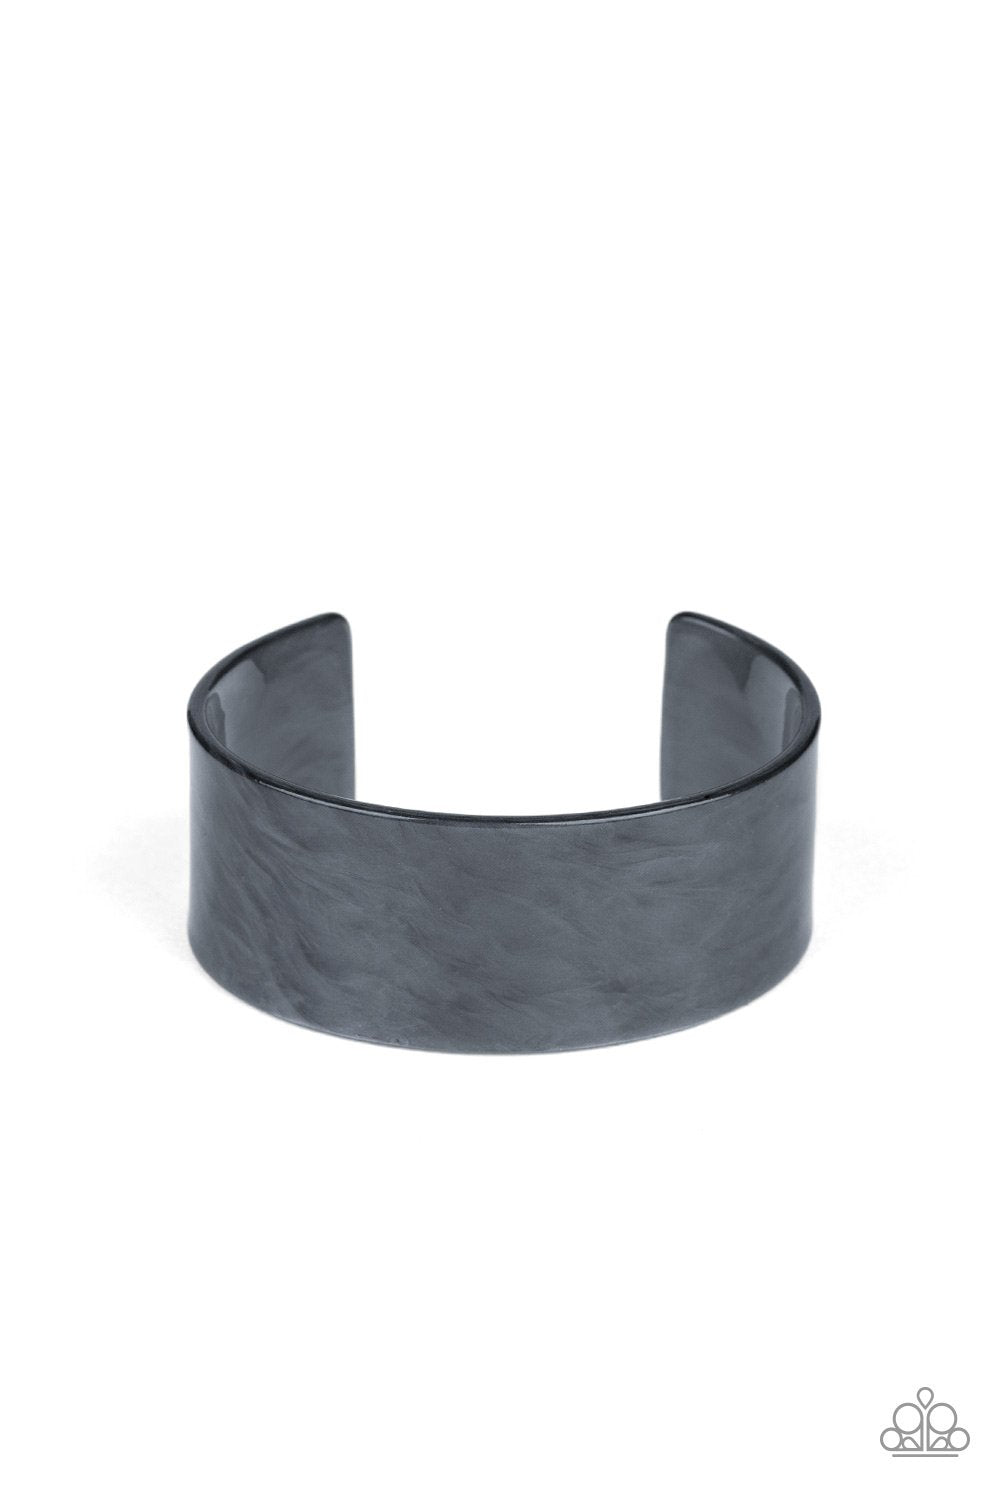 Glaze Over Silver Shimmer Acrylic Cuff Bracelet - Paparazzi Accessories-CarasShop.com - $5 Jewelry by Cara Jewels